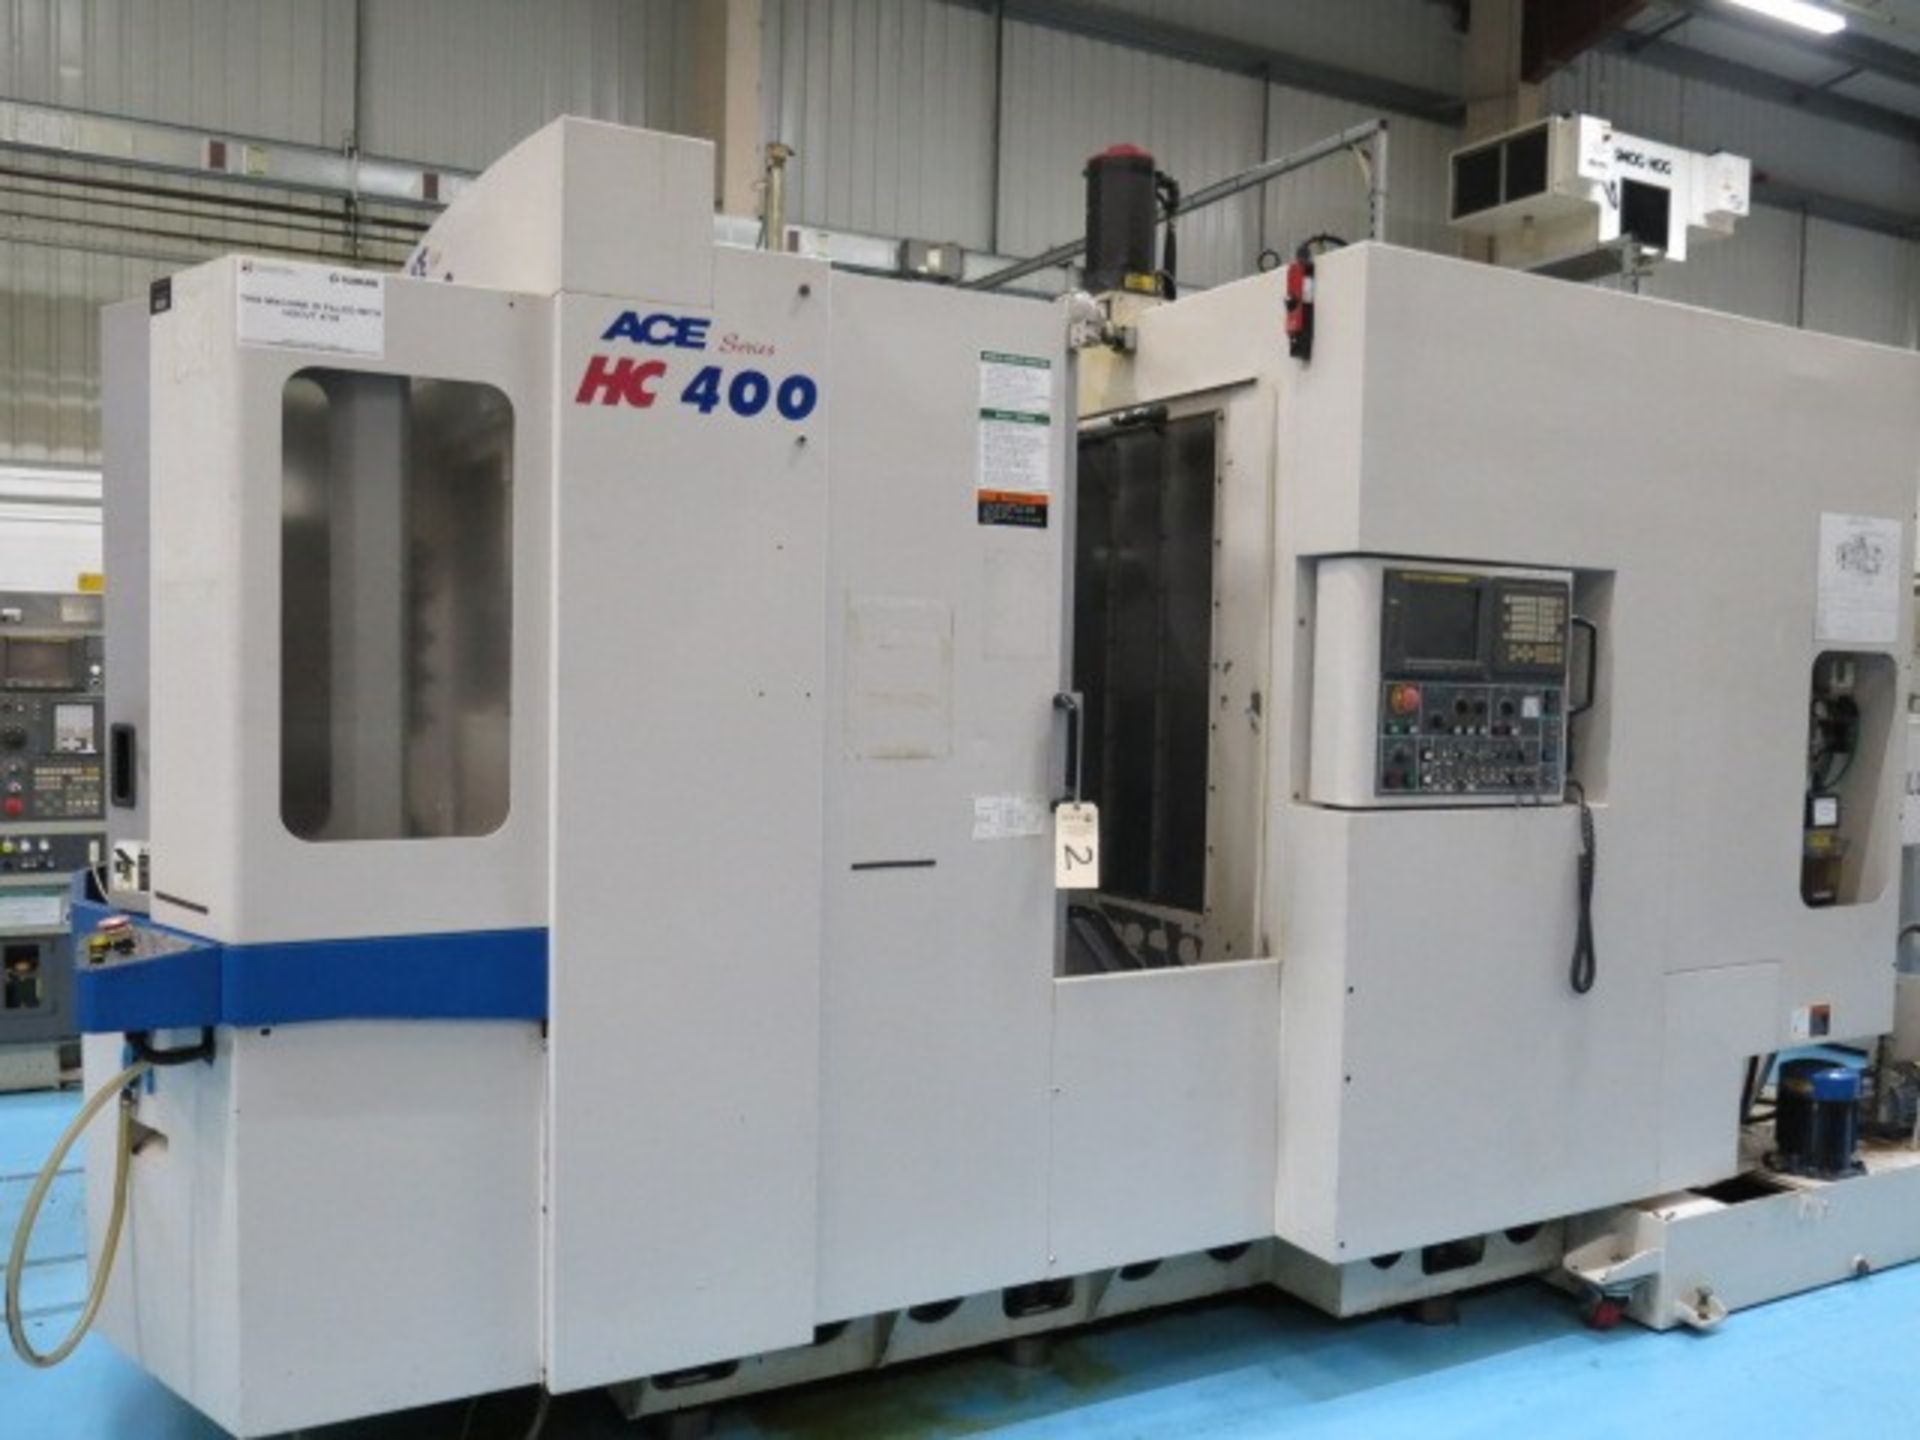 Daewoo Model Ace HC400 Series CNC Horizontal Machining Center with (2) 16'' x 16'' Pallets, 360